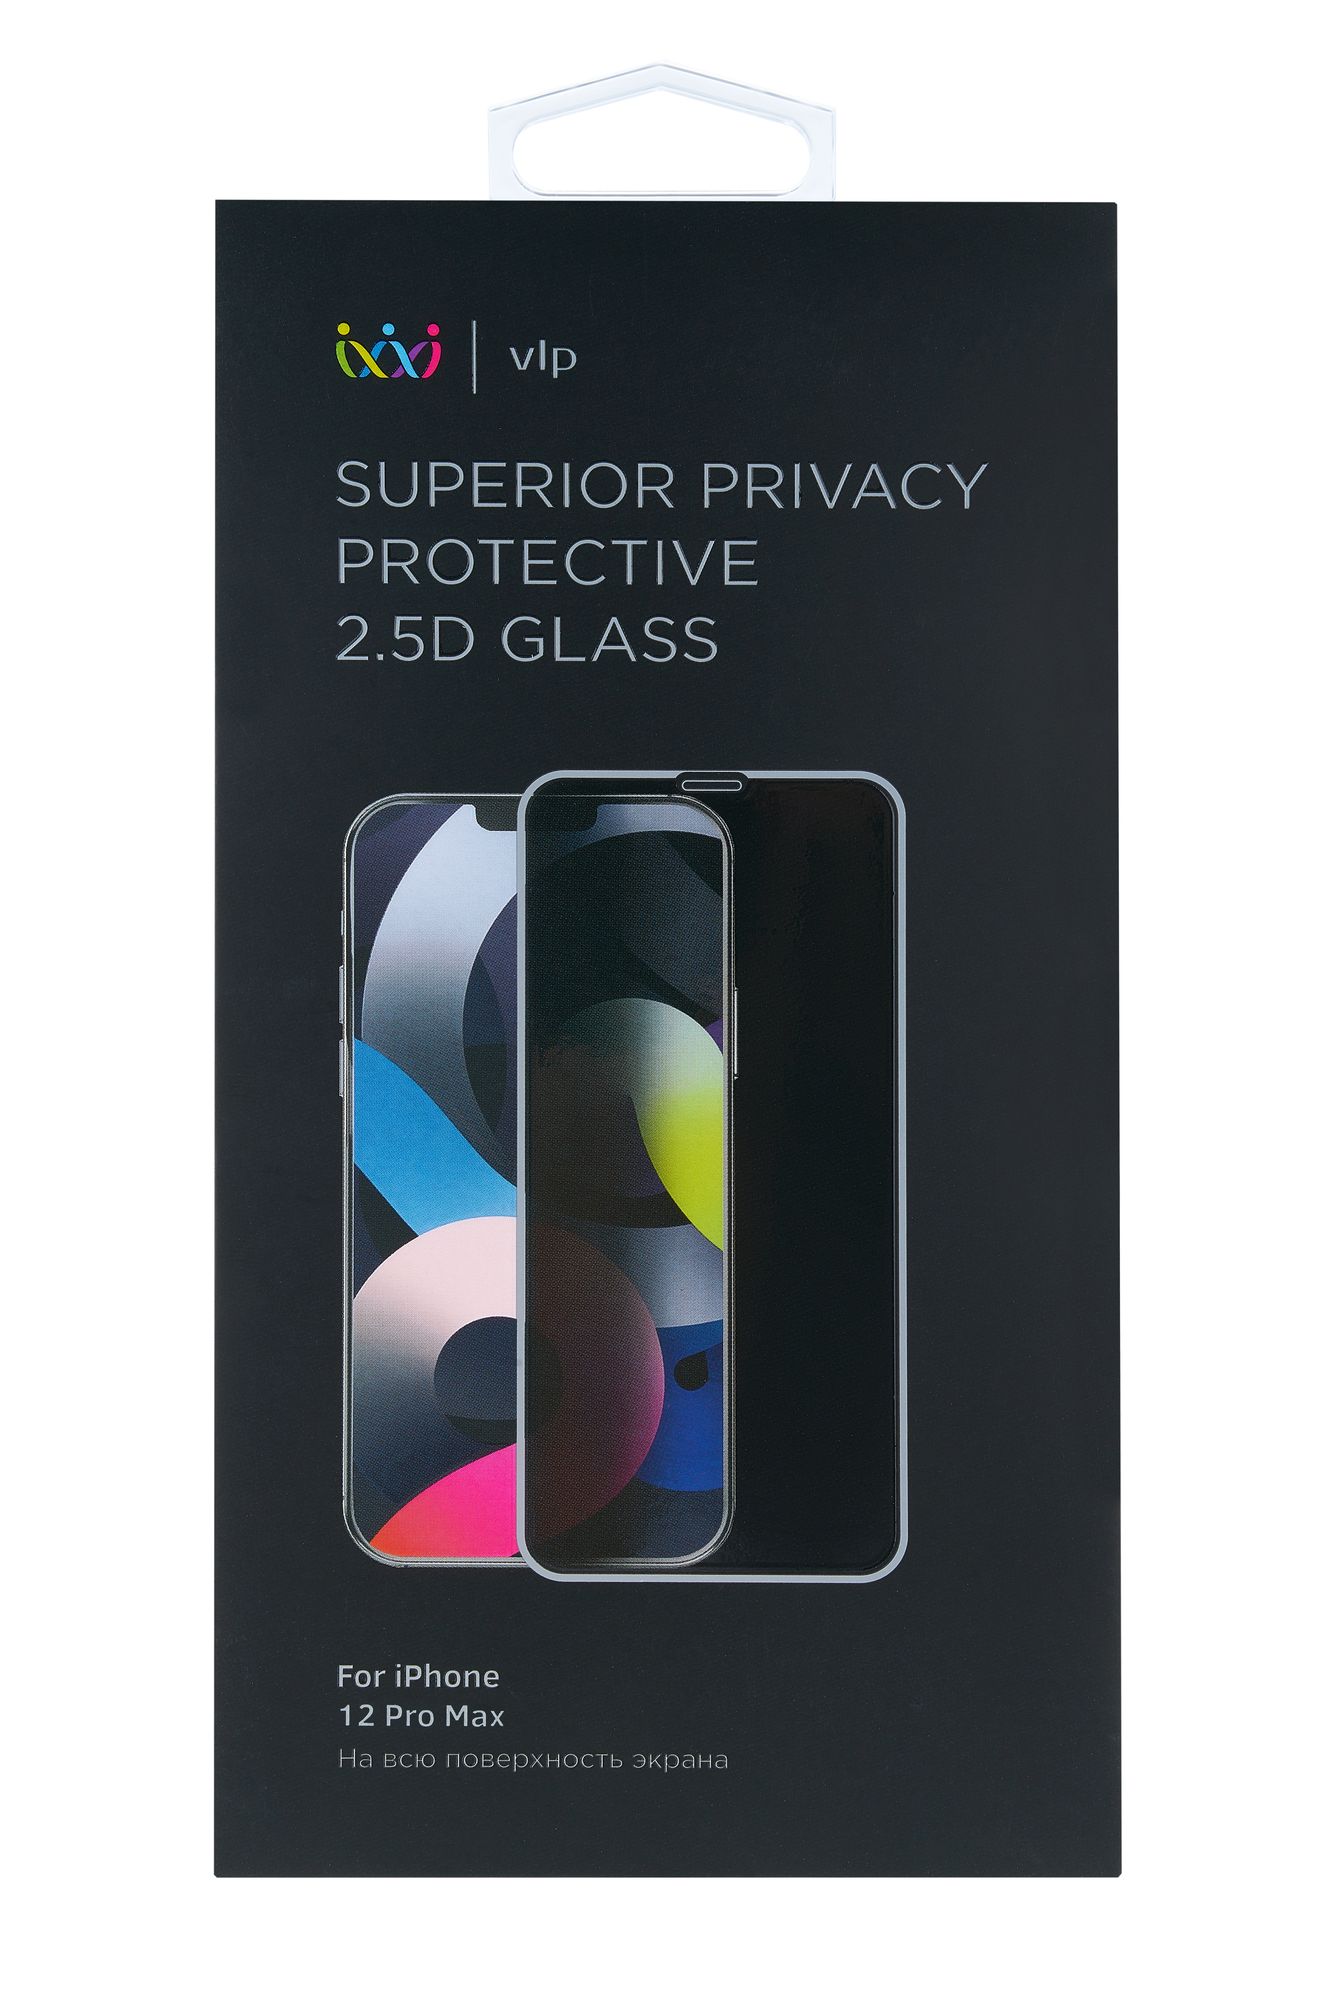 Стекло 2.5D защитное VLP Privacy для iPhone 12 ProMax, черная рамка